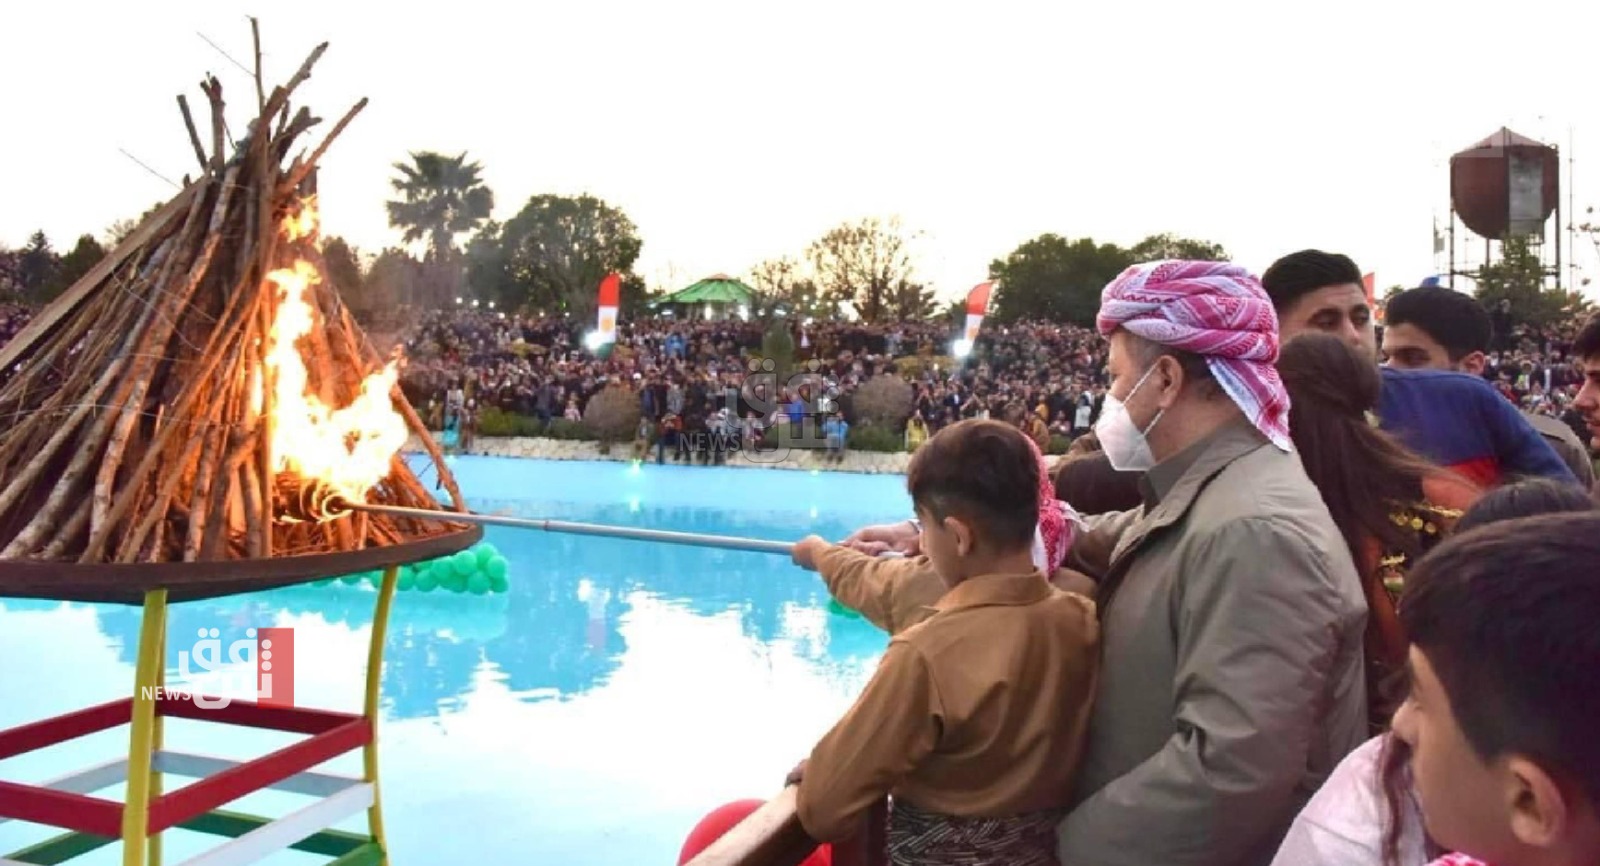 Leader Barzani ignites the Newroz flame in Erbil 